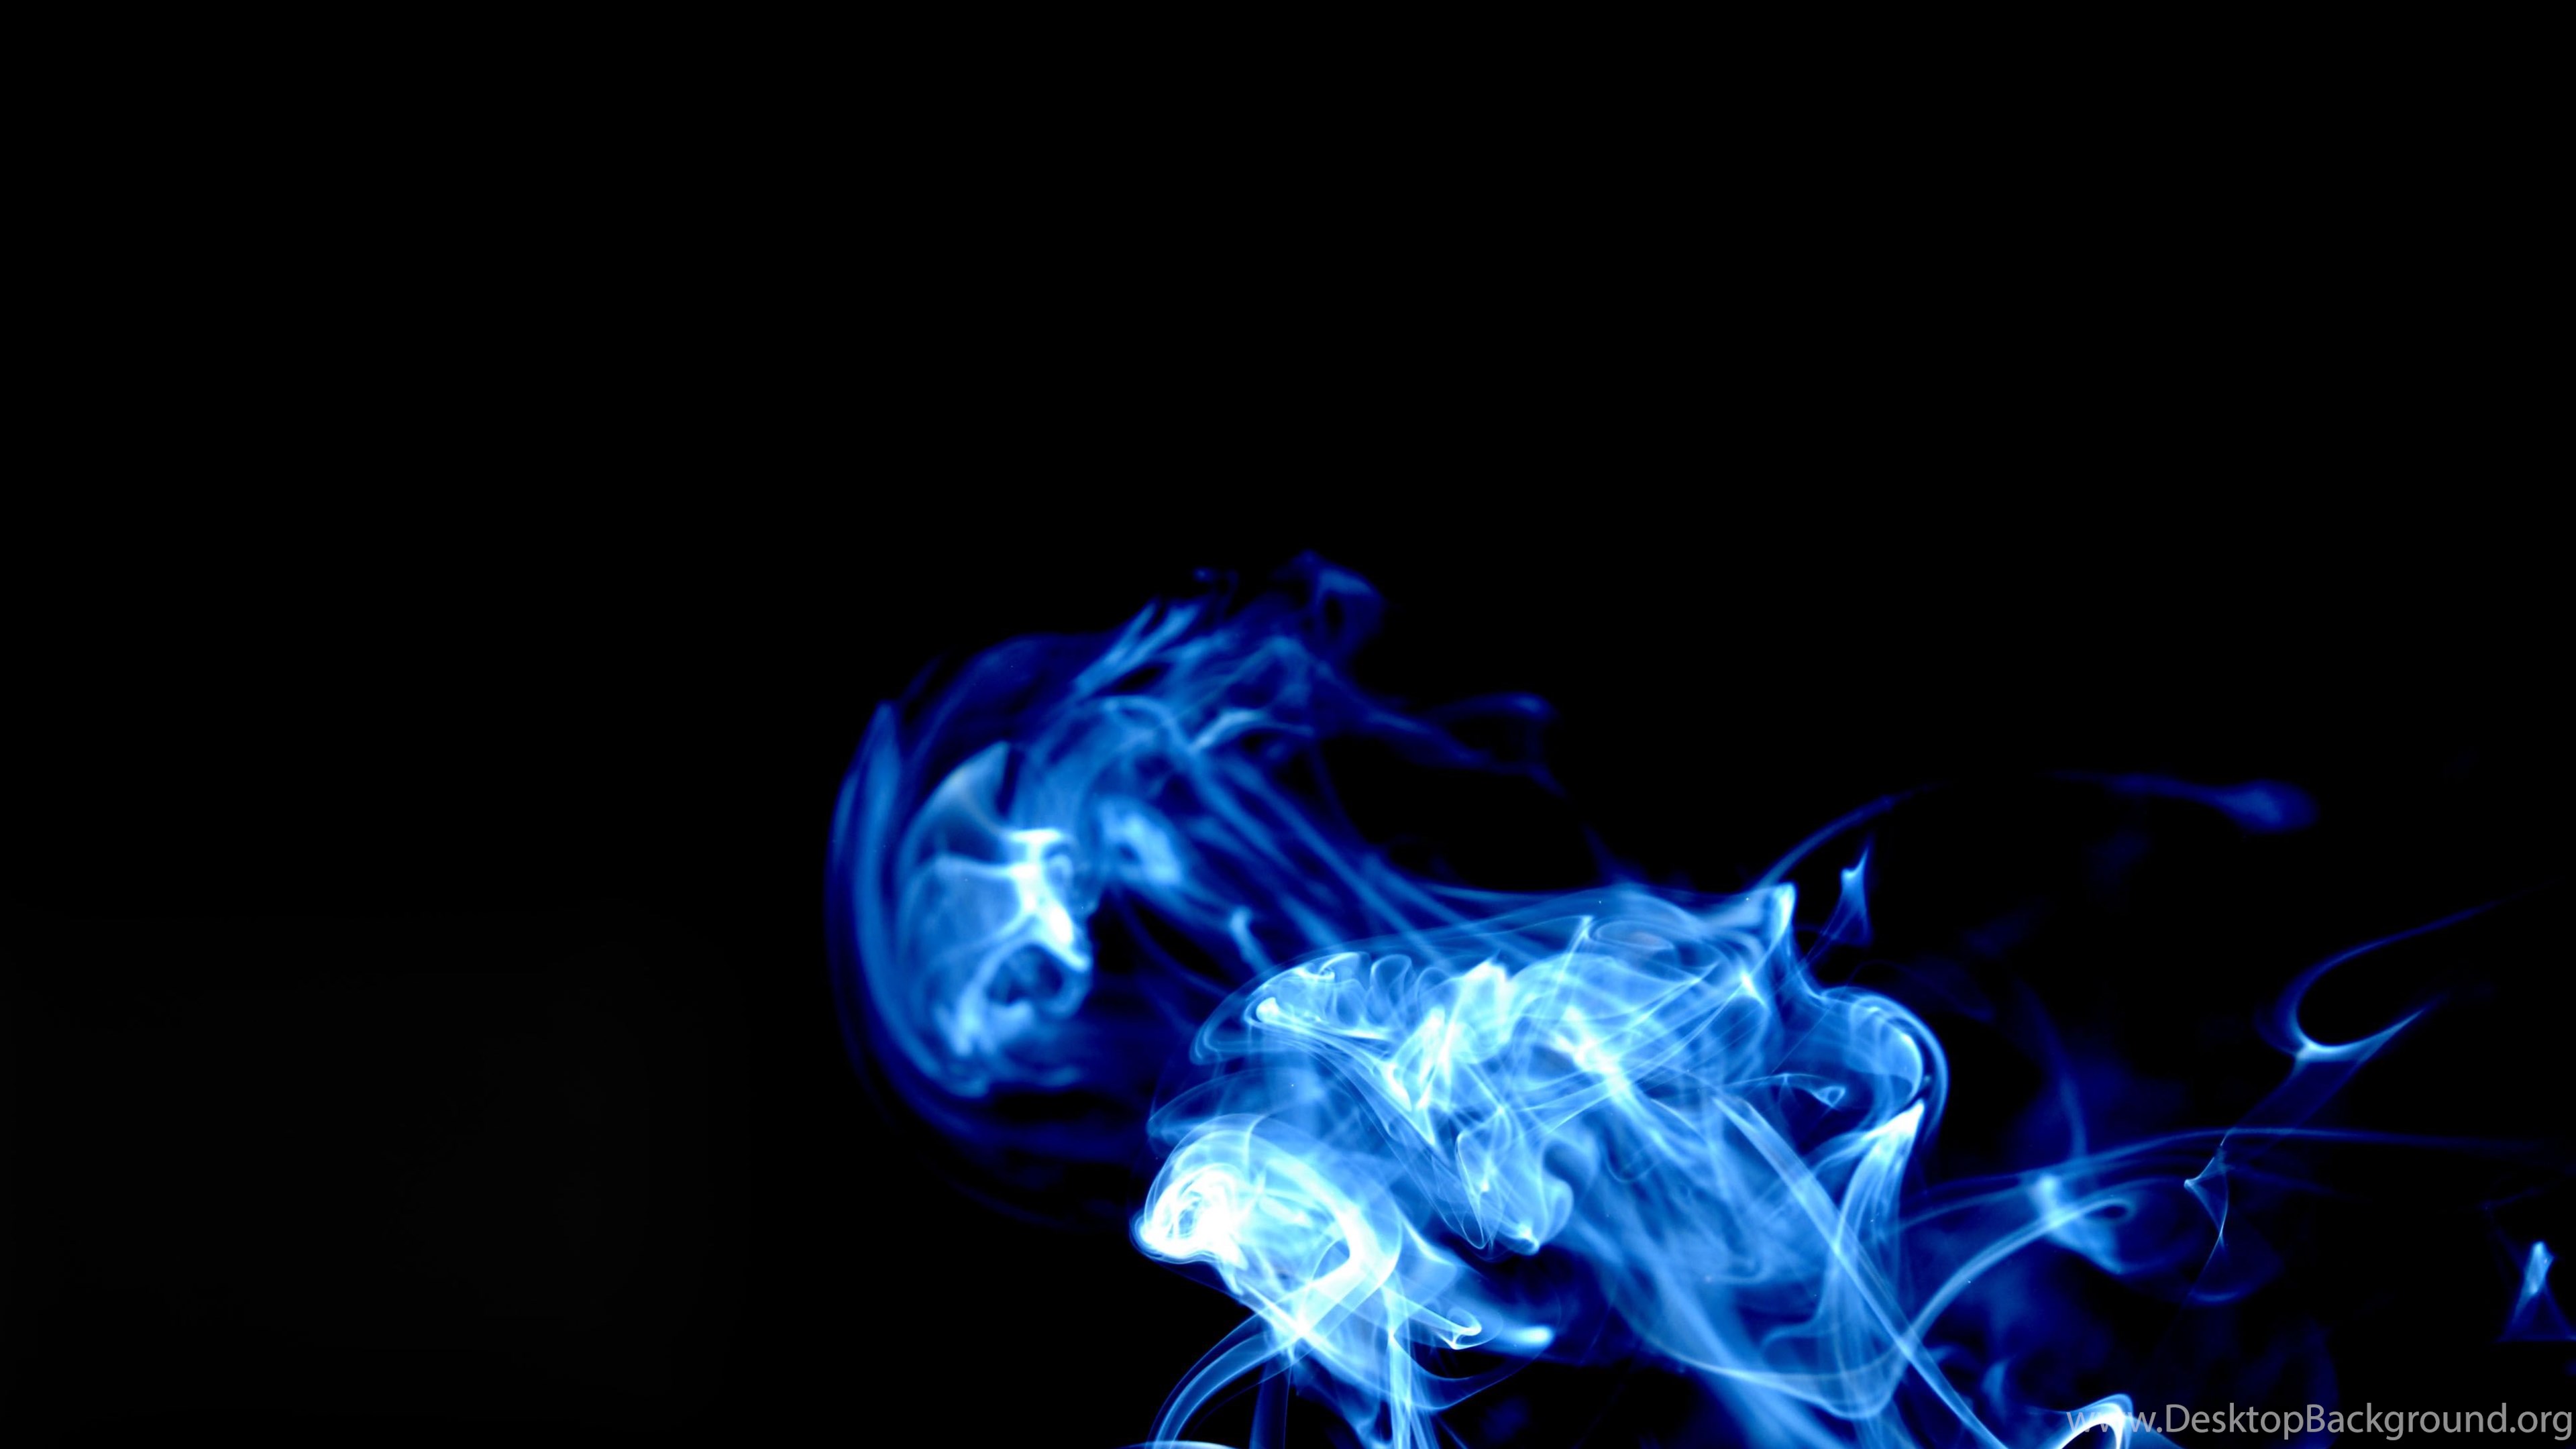 Top Blue Smoke 2 Wallpaper Images For Pinterest Desktop Background